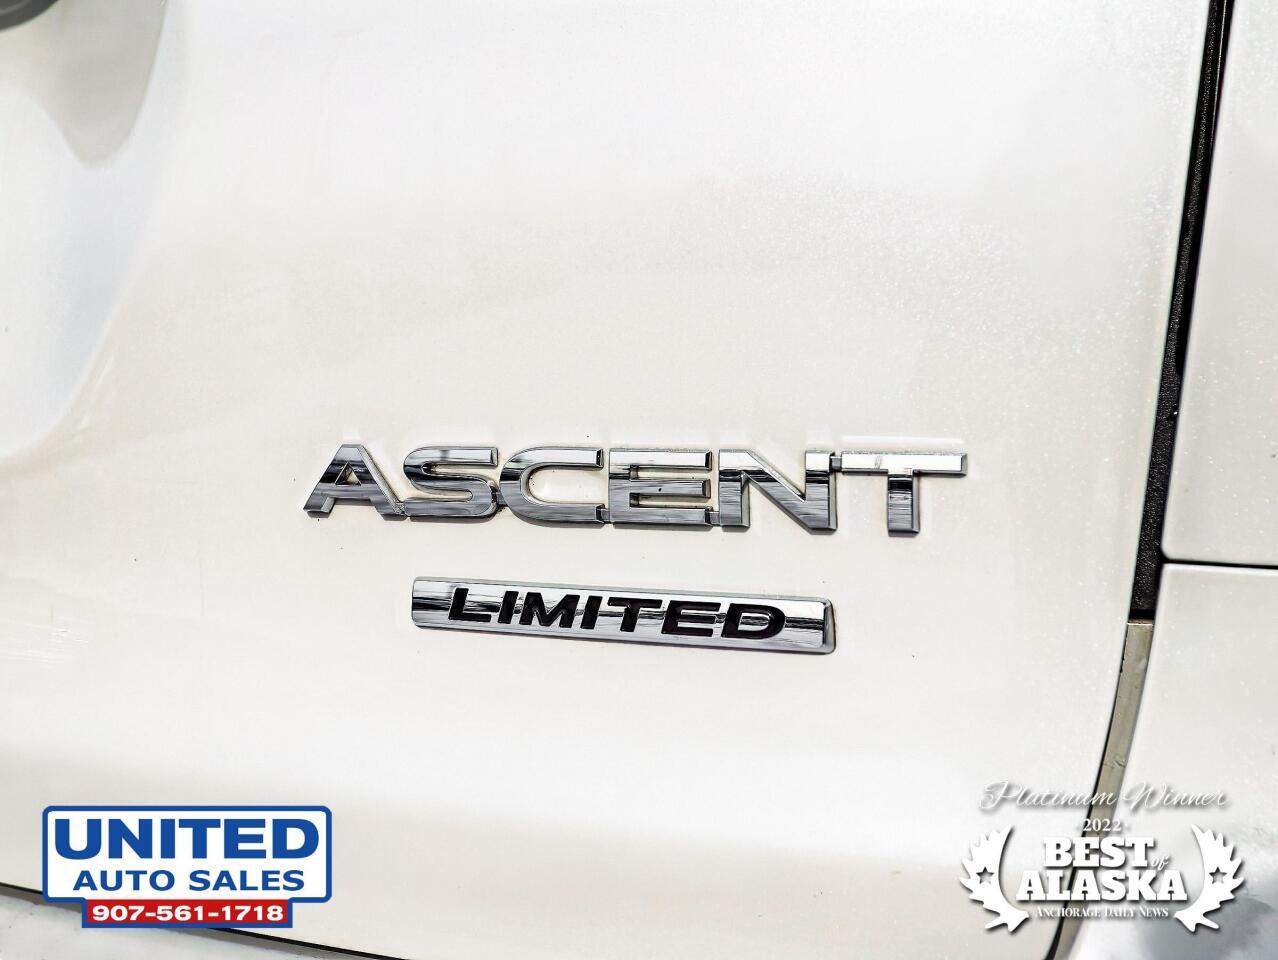 2020 Subaru Ascent Limited 7 Passenger AWD 4dr SUV 24